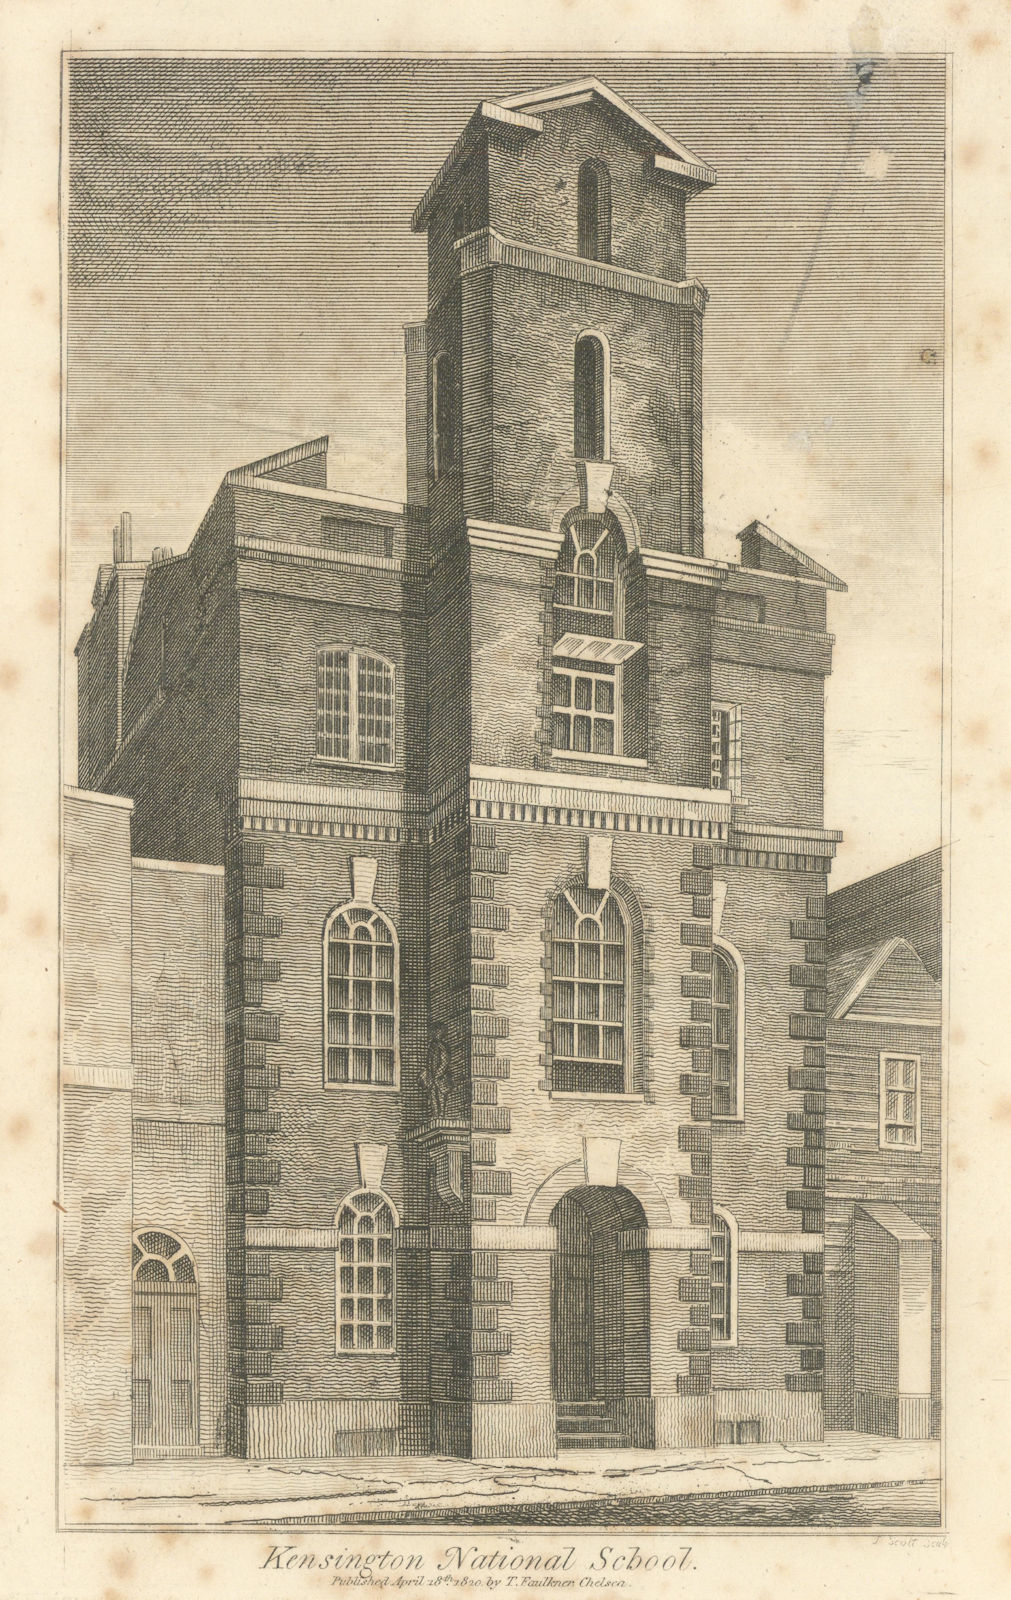 Kensington National School, Kensington High Street. Destroyed 1880. 1820 print